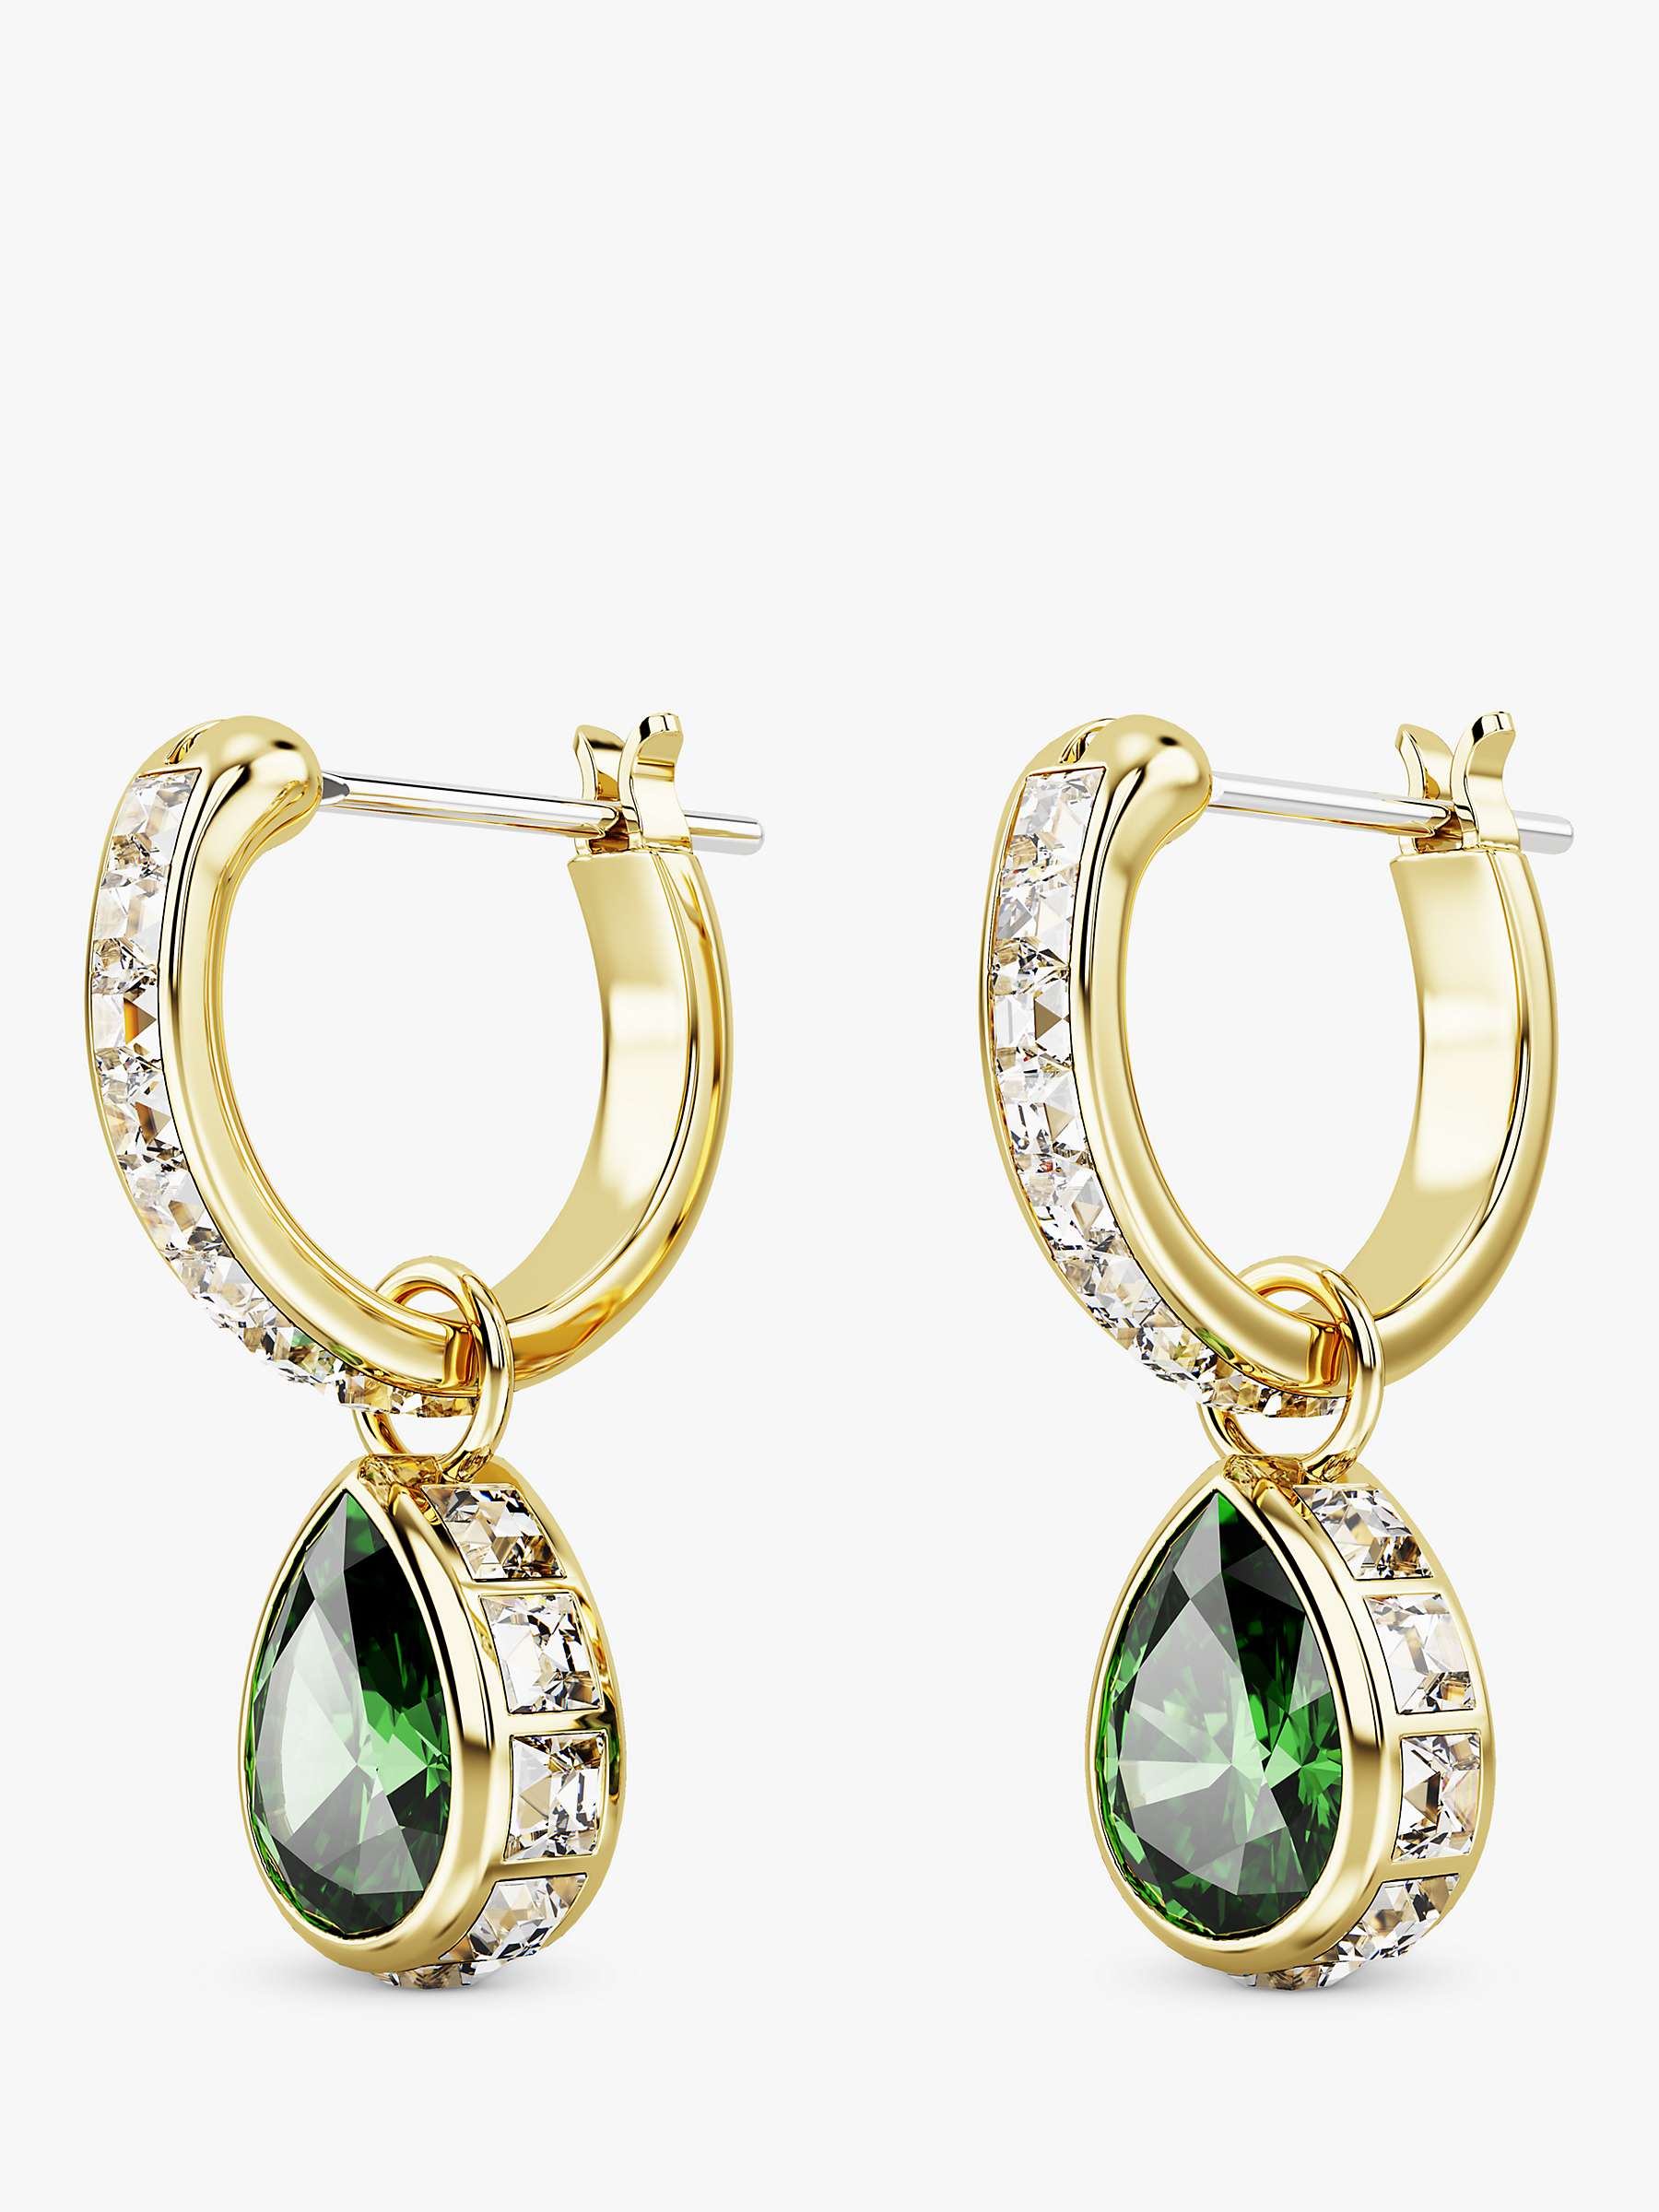 Buy Swarovski Stilla Hoop and Pear Drop Crystal Earrings, Gold/Green Online at johnlewis.com